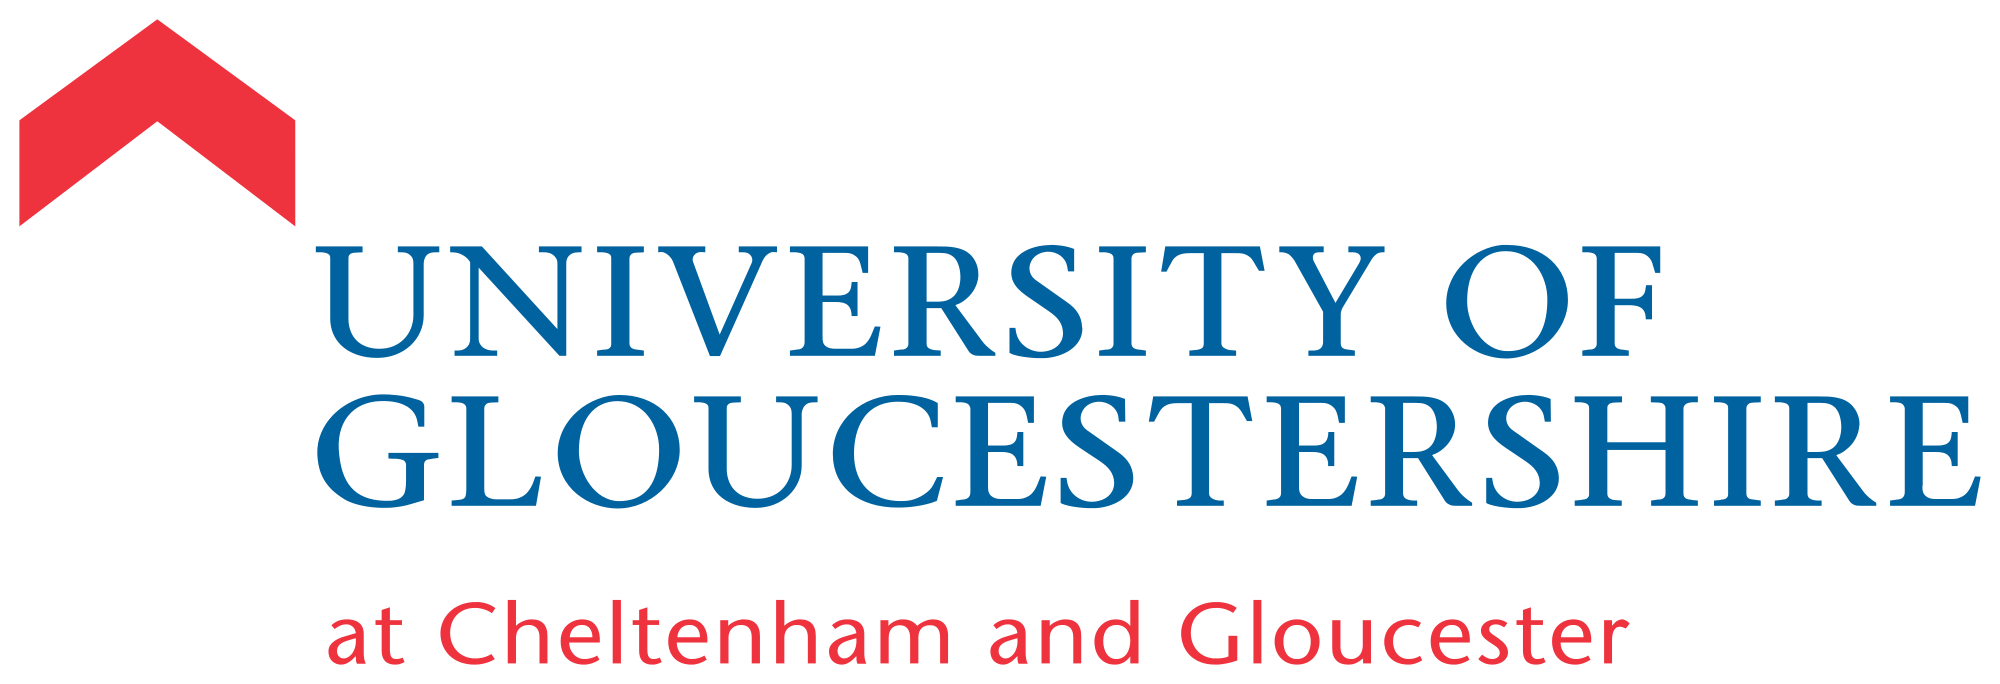 University_of_Gloucestershire_logo.png